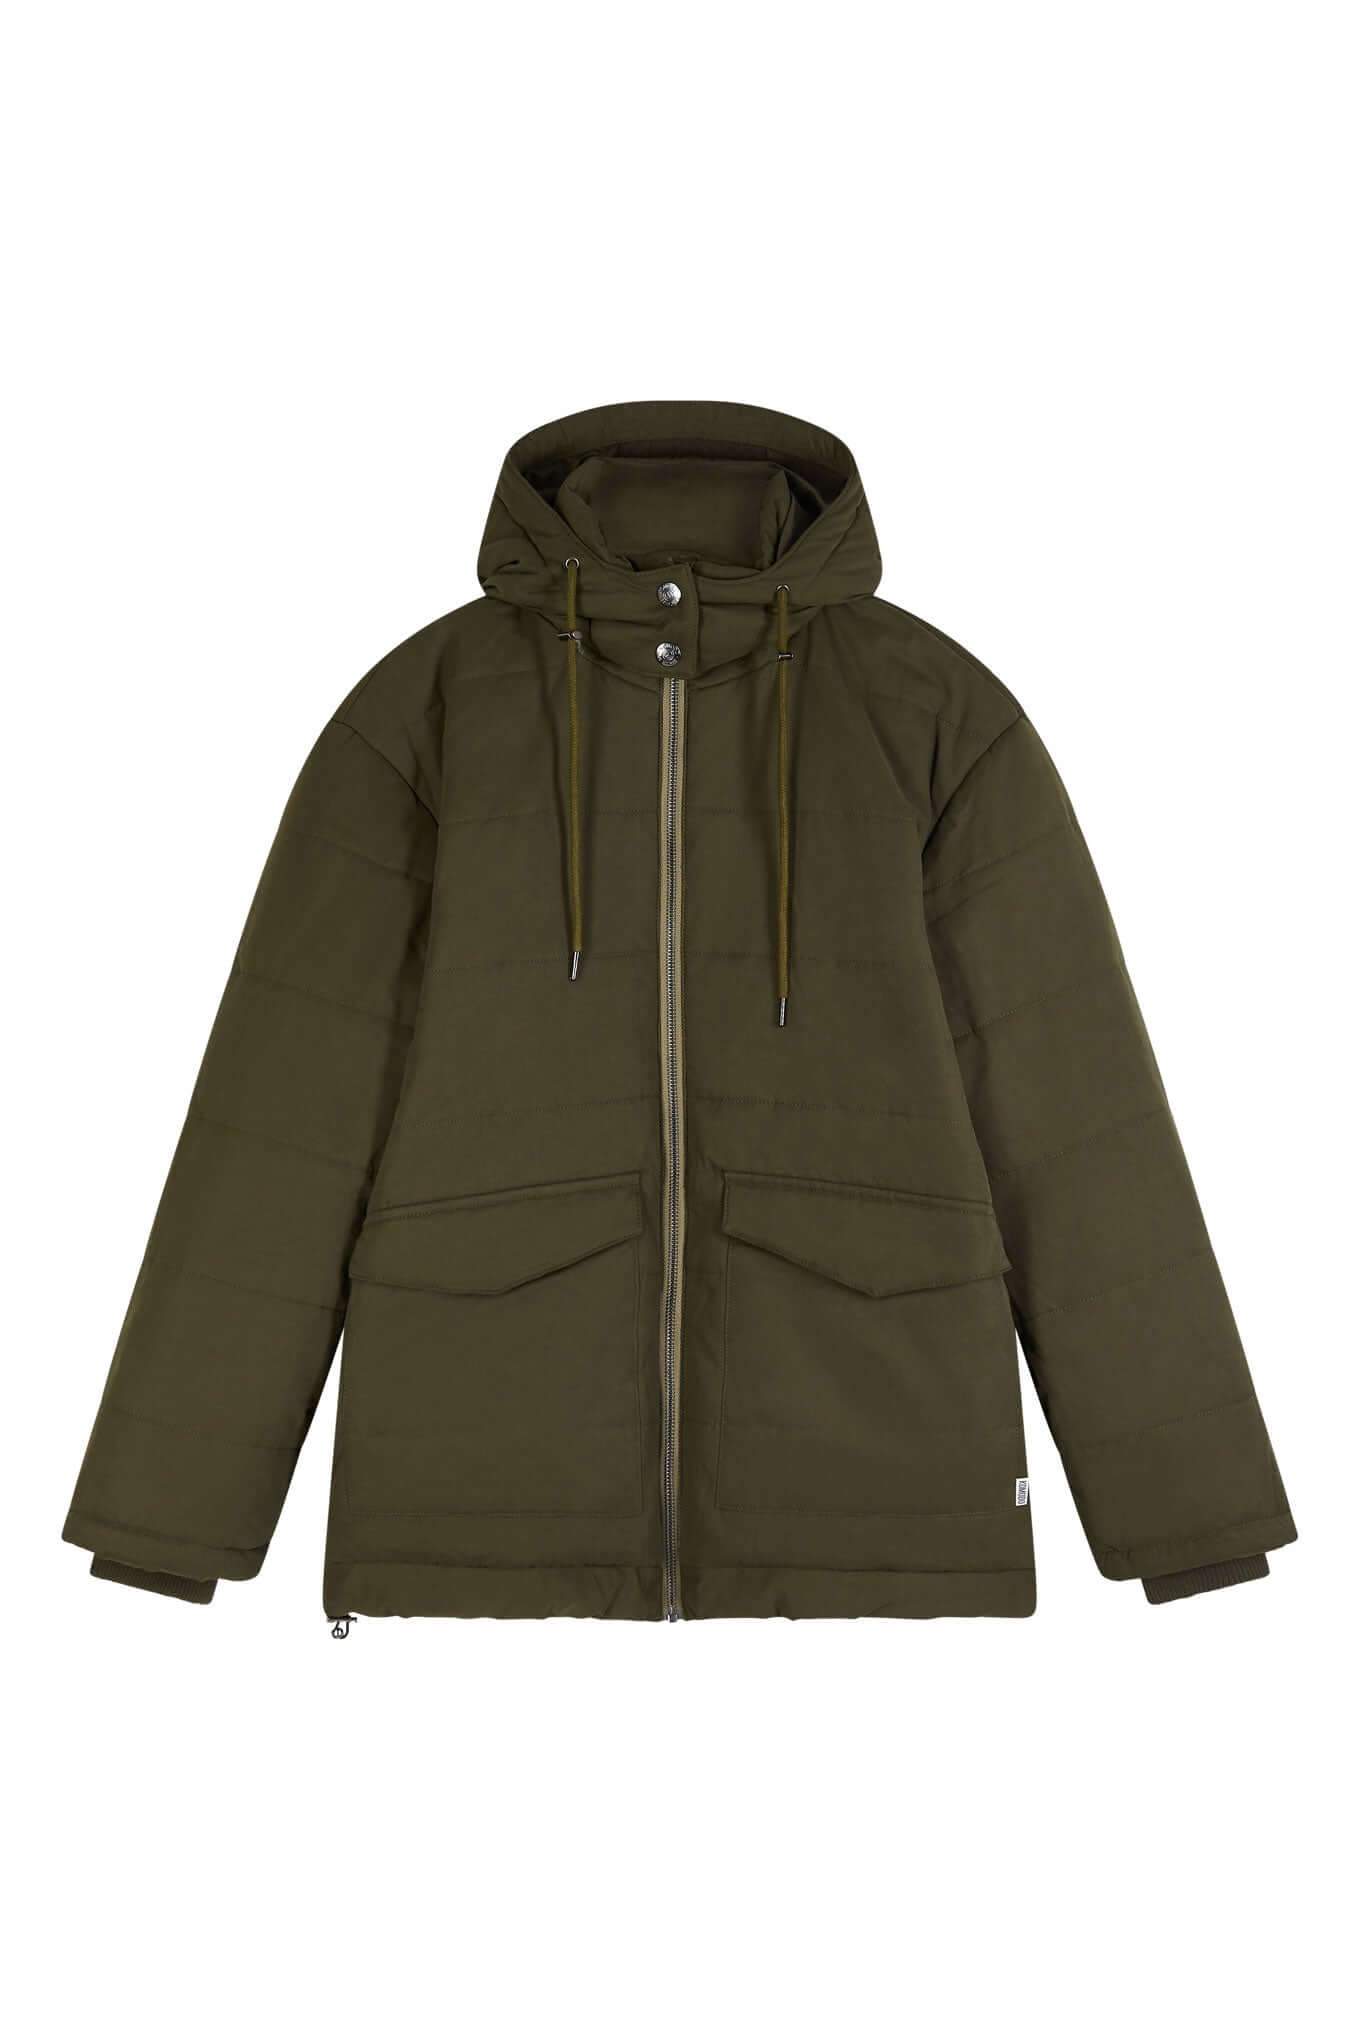 DAI Womens Recycled Fleece Jacket Khaki, Size 4 / UK 14 / EUR 42